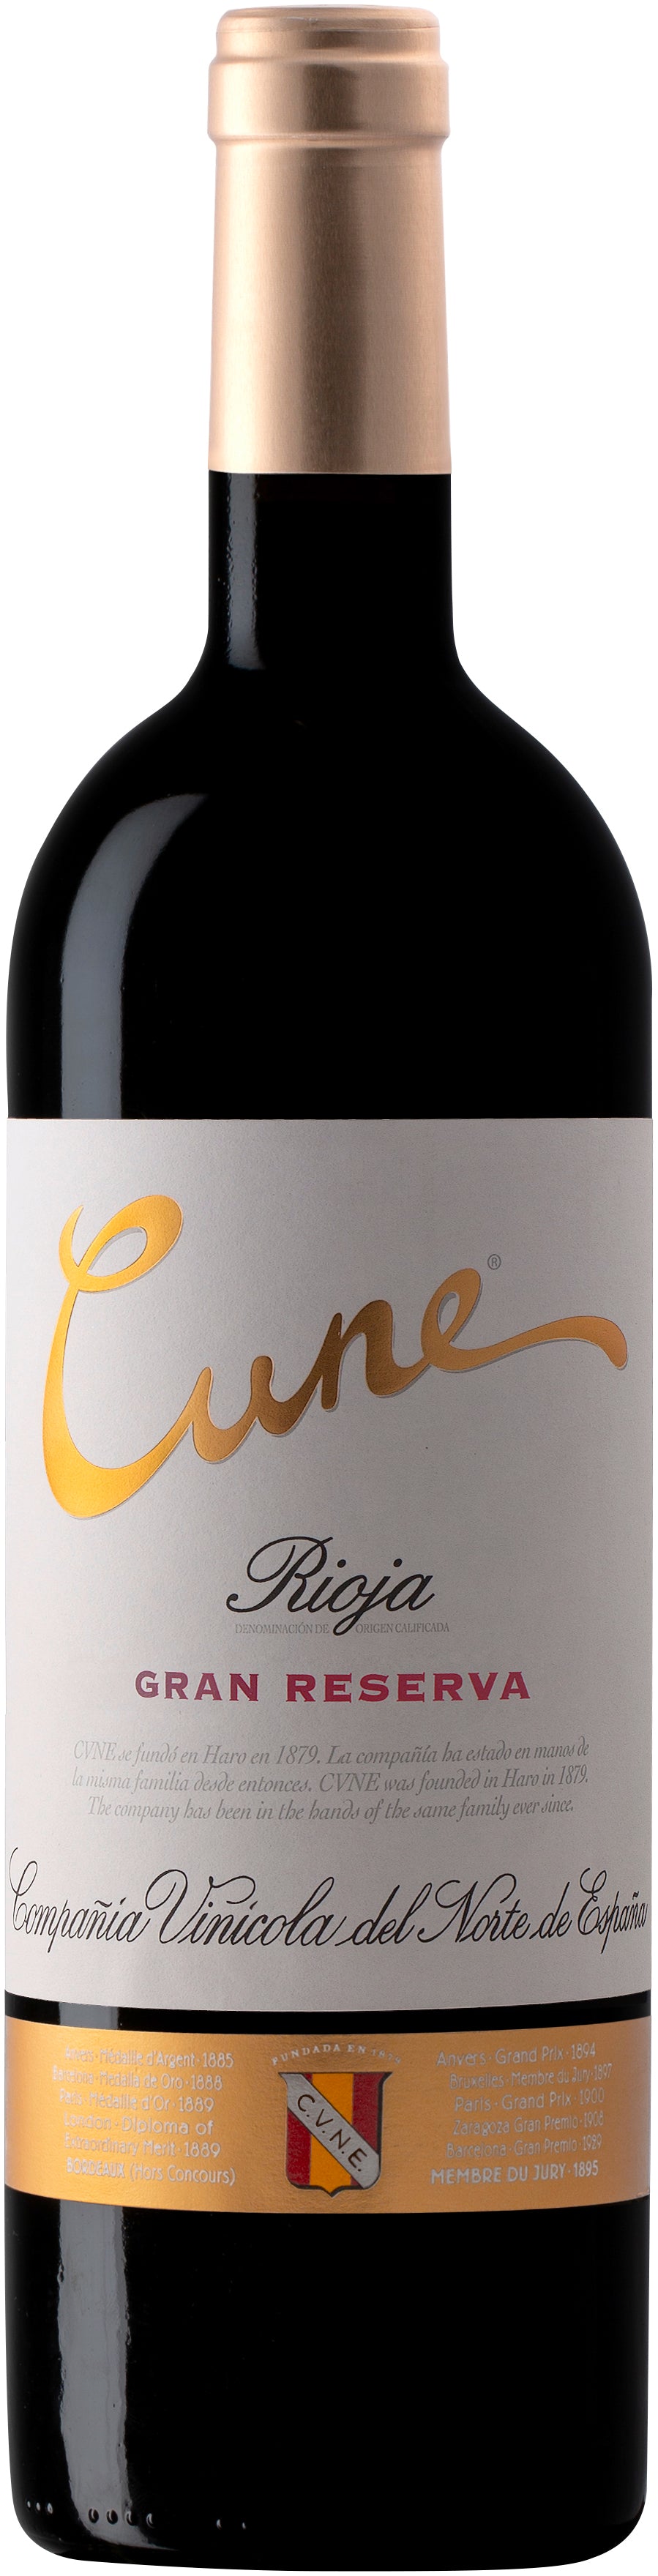 Cune Rioja Tinto Gran Reserva DOCa - StillWine GmbH